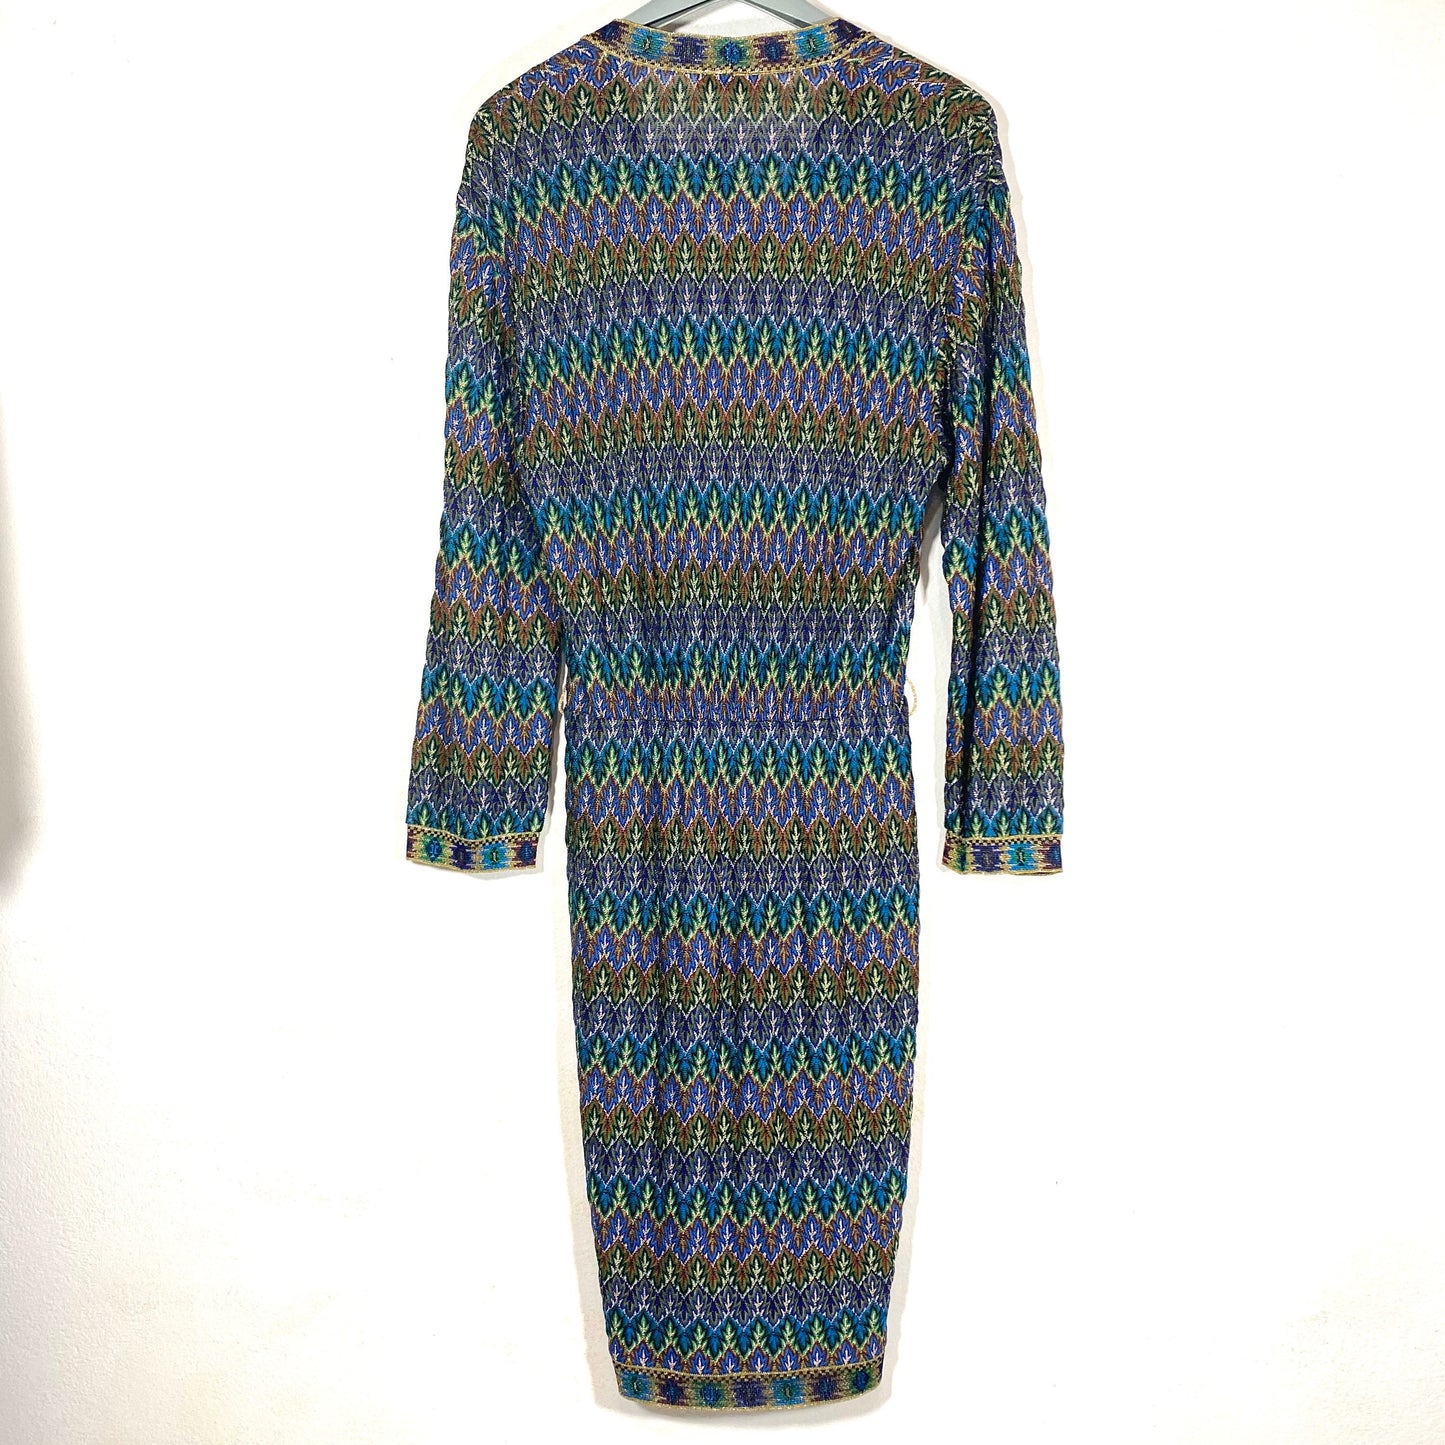 Missoni stunning boho green/purple/gold tones viscose/cupro jacquard knitted dress, great condition